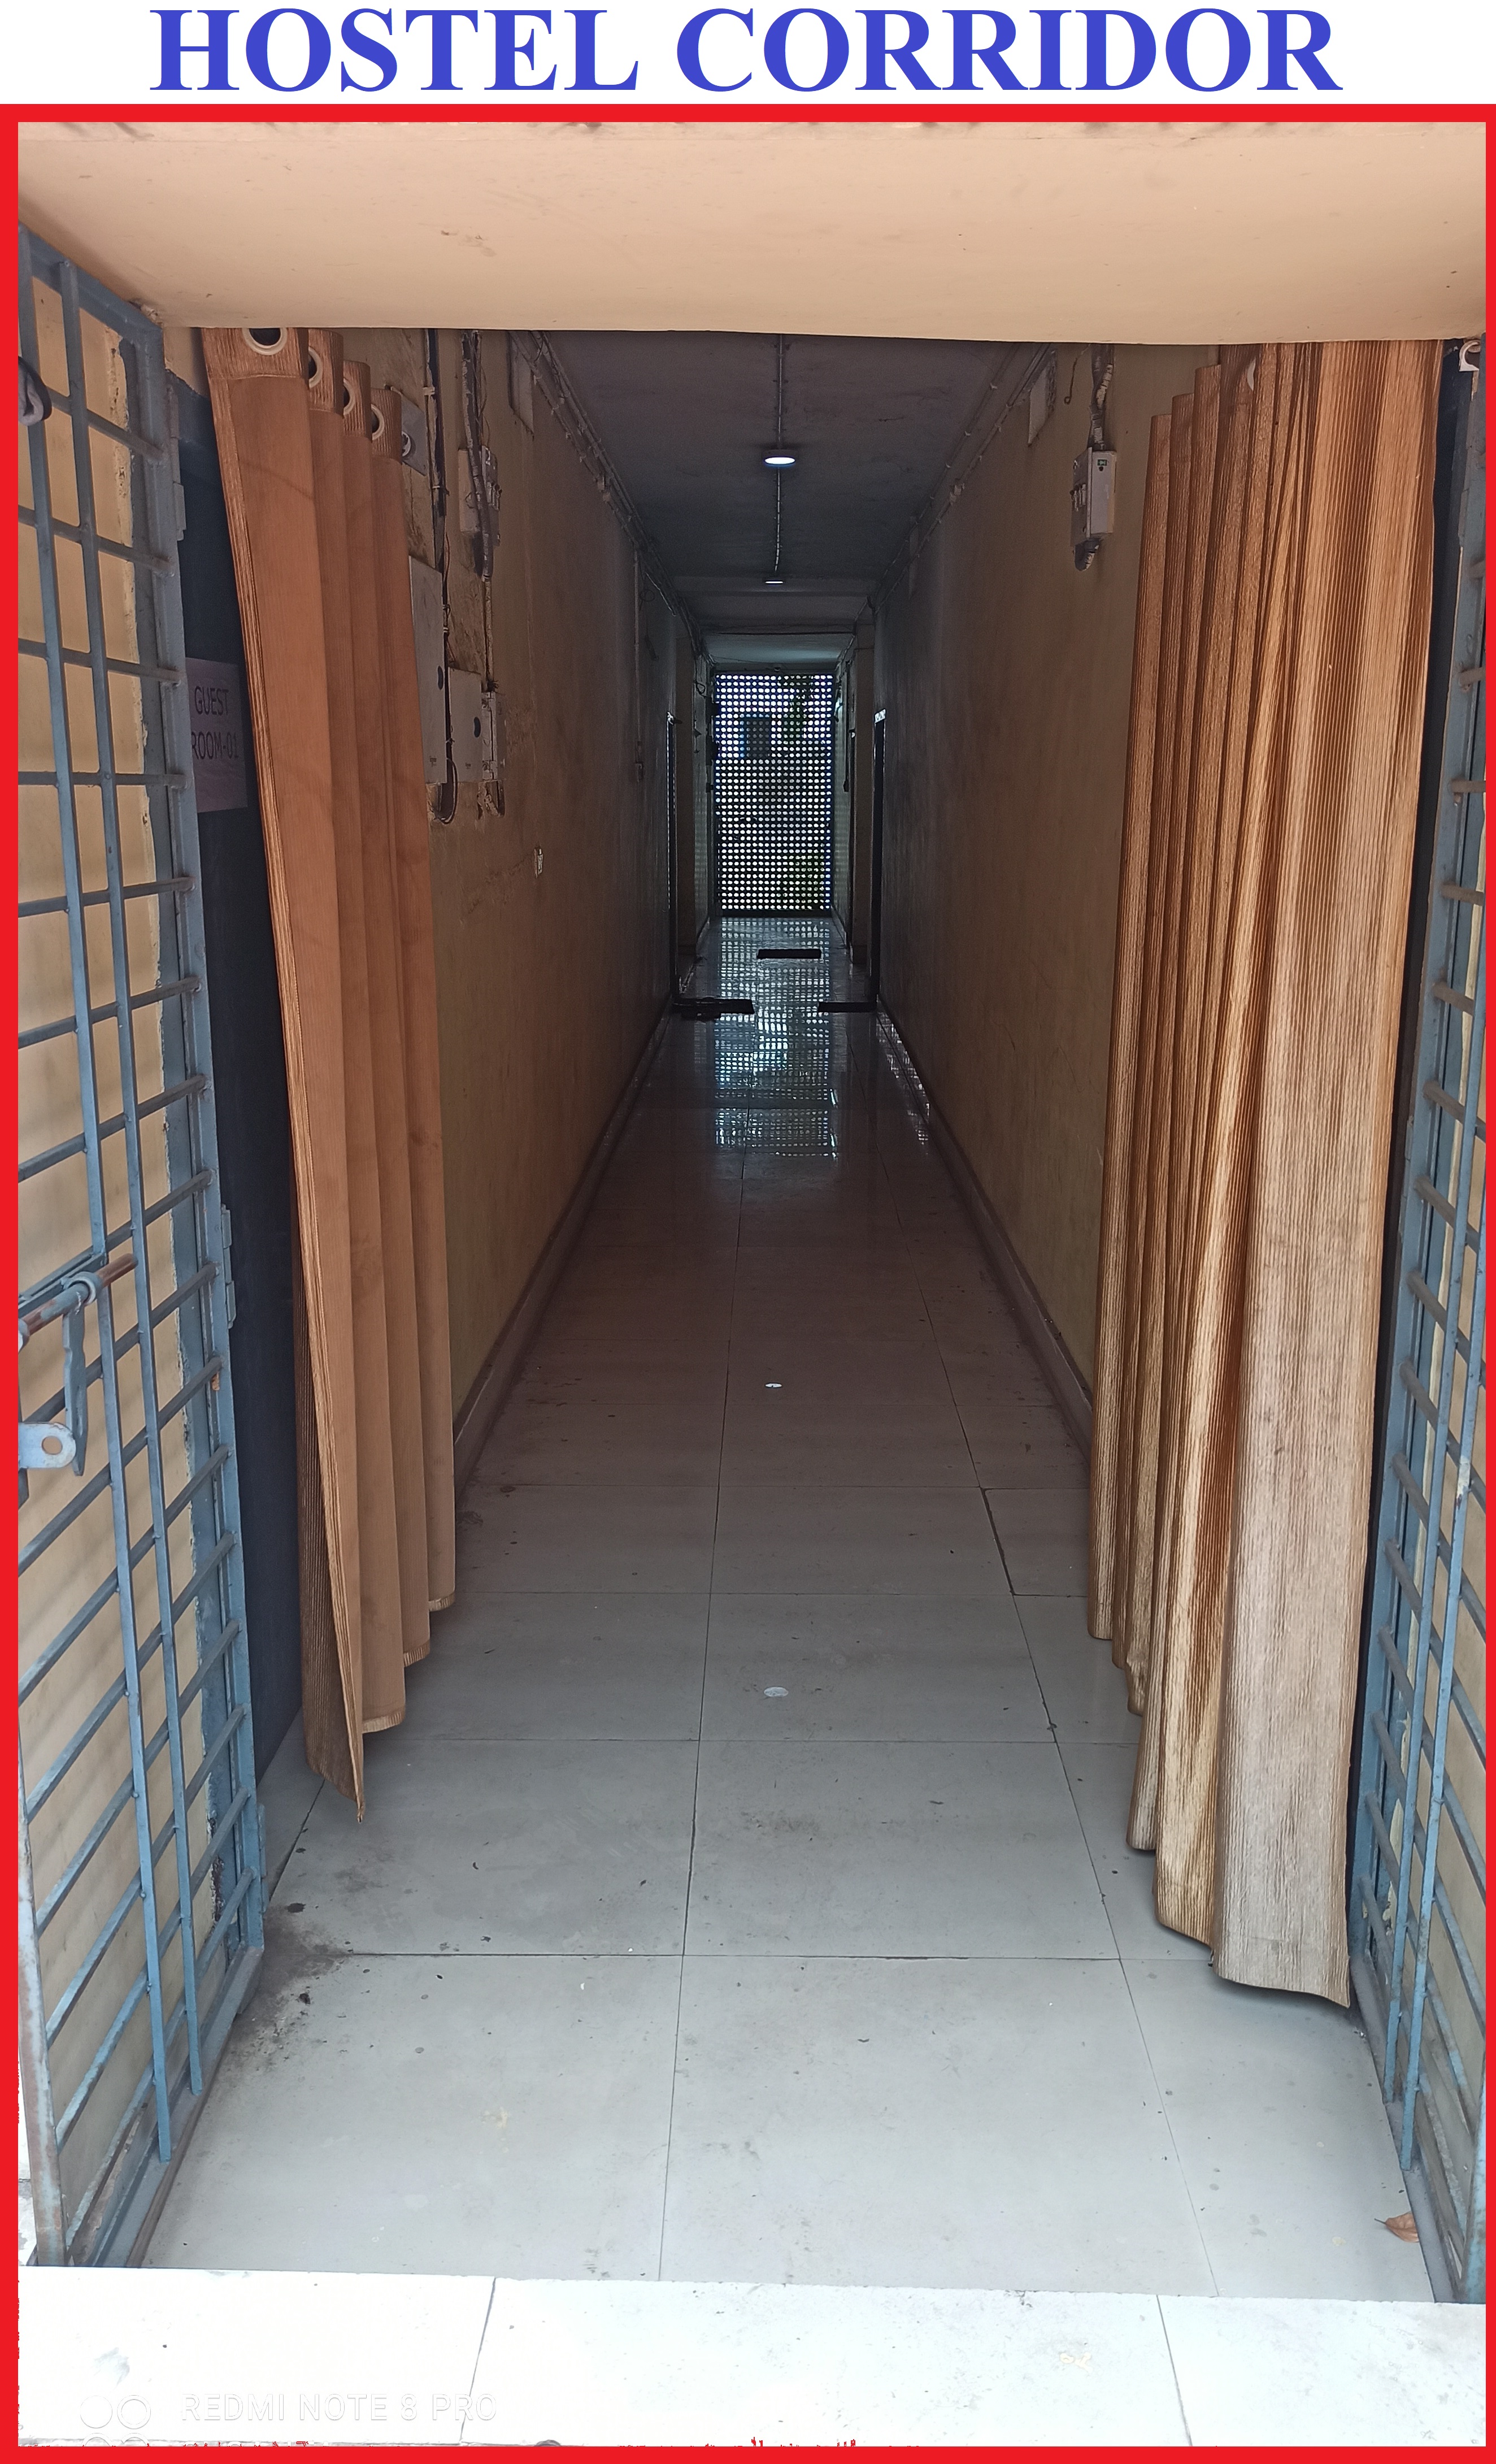 3 Hostel Corridor 